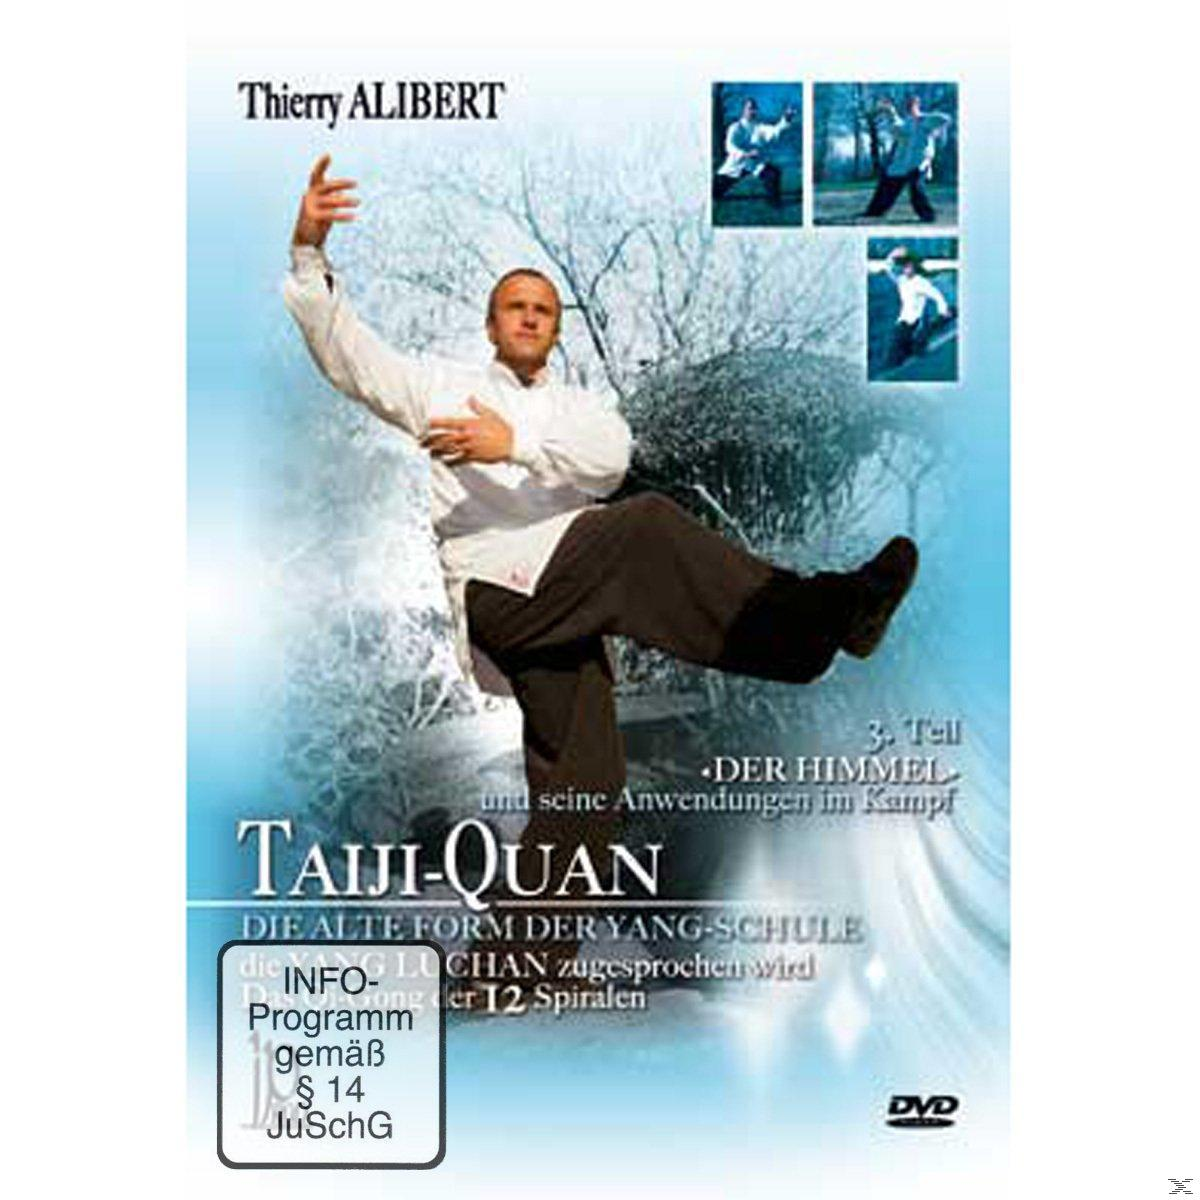 Form Taiji-Quan der - DVD alte 3 Die Yang-Schule